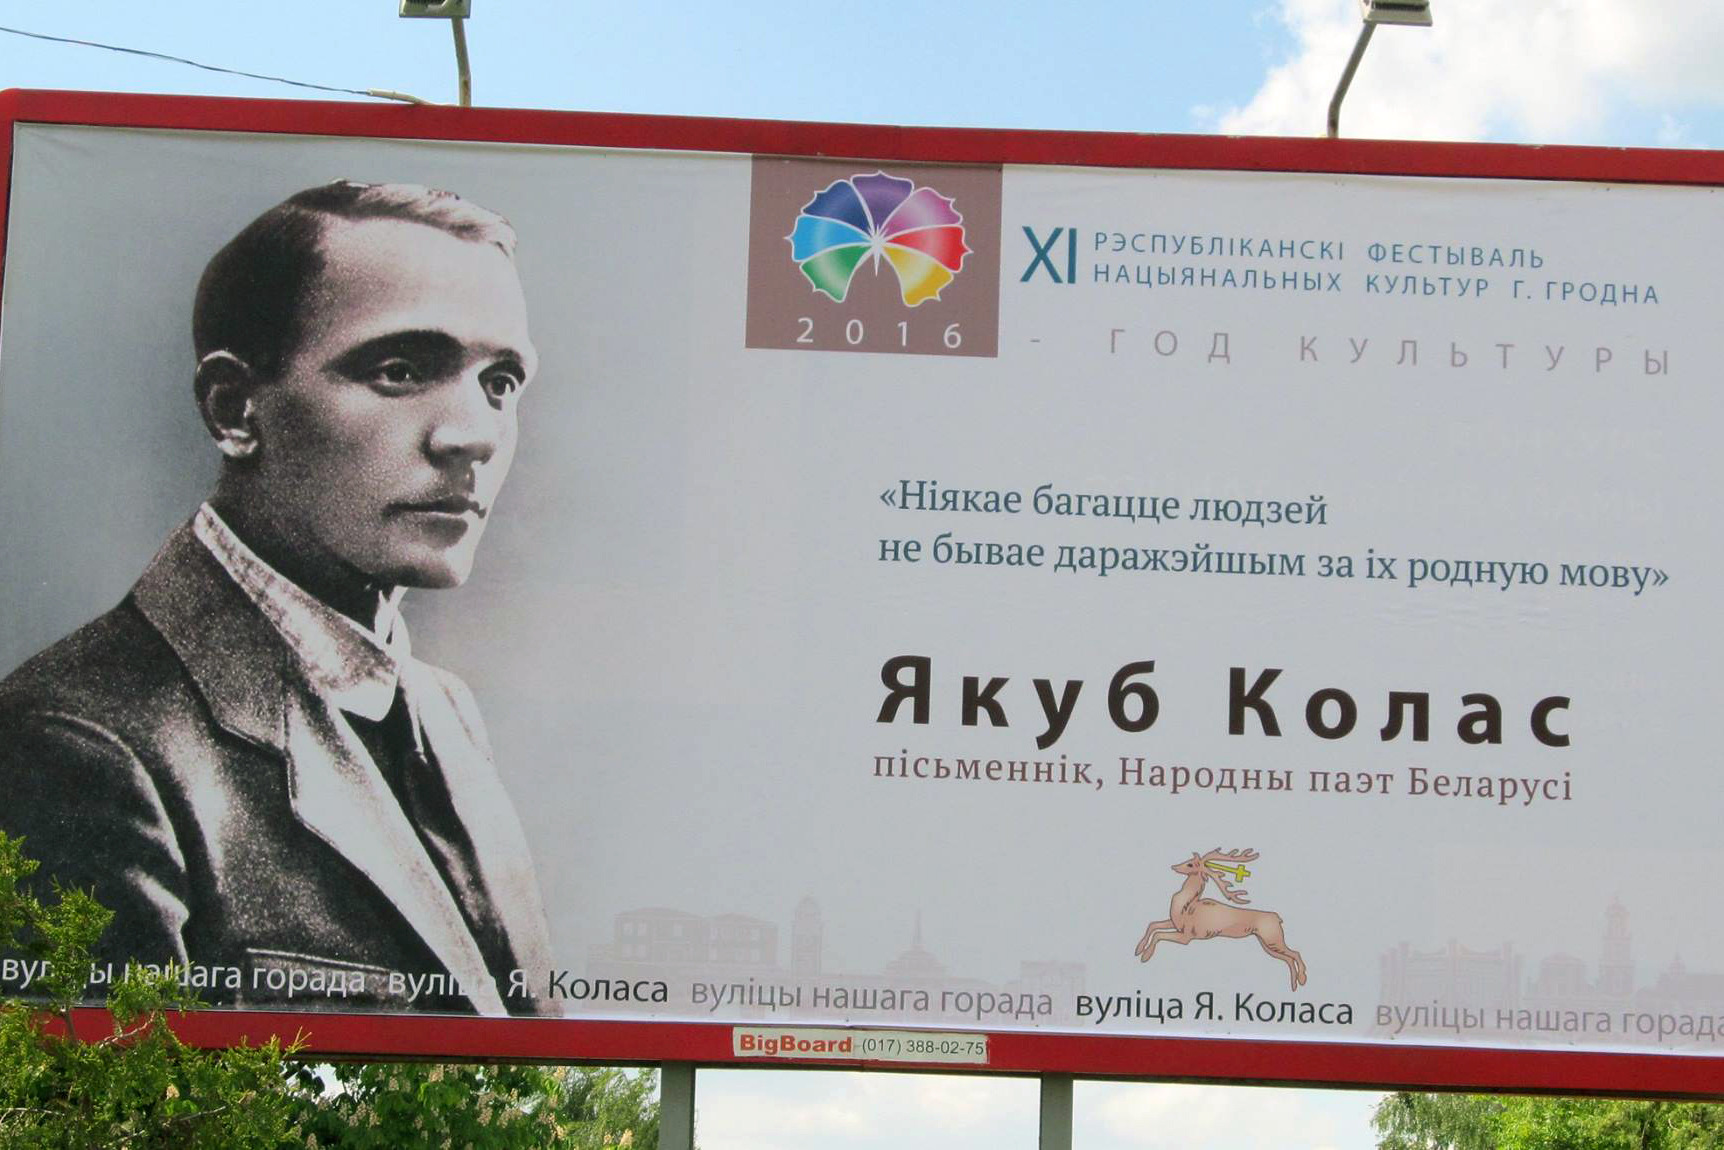 Плакат в Гродно, фото: Михась Скобла